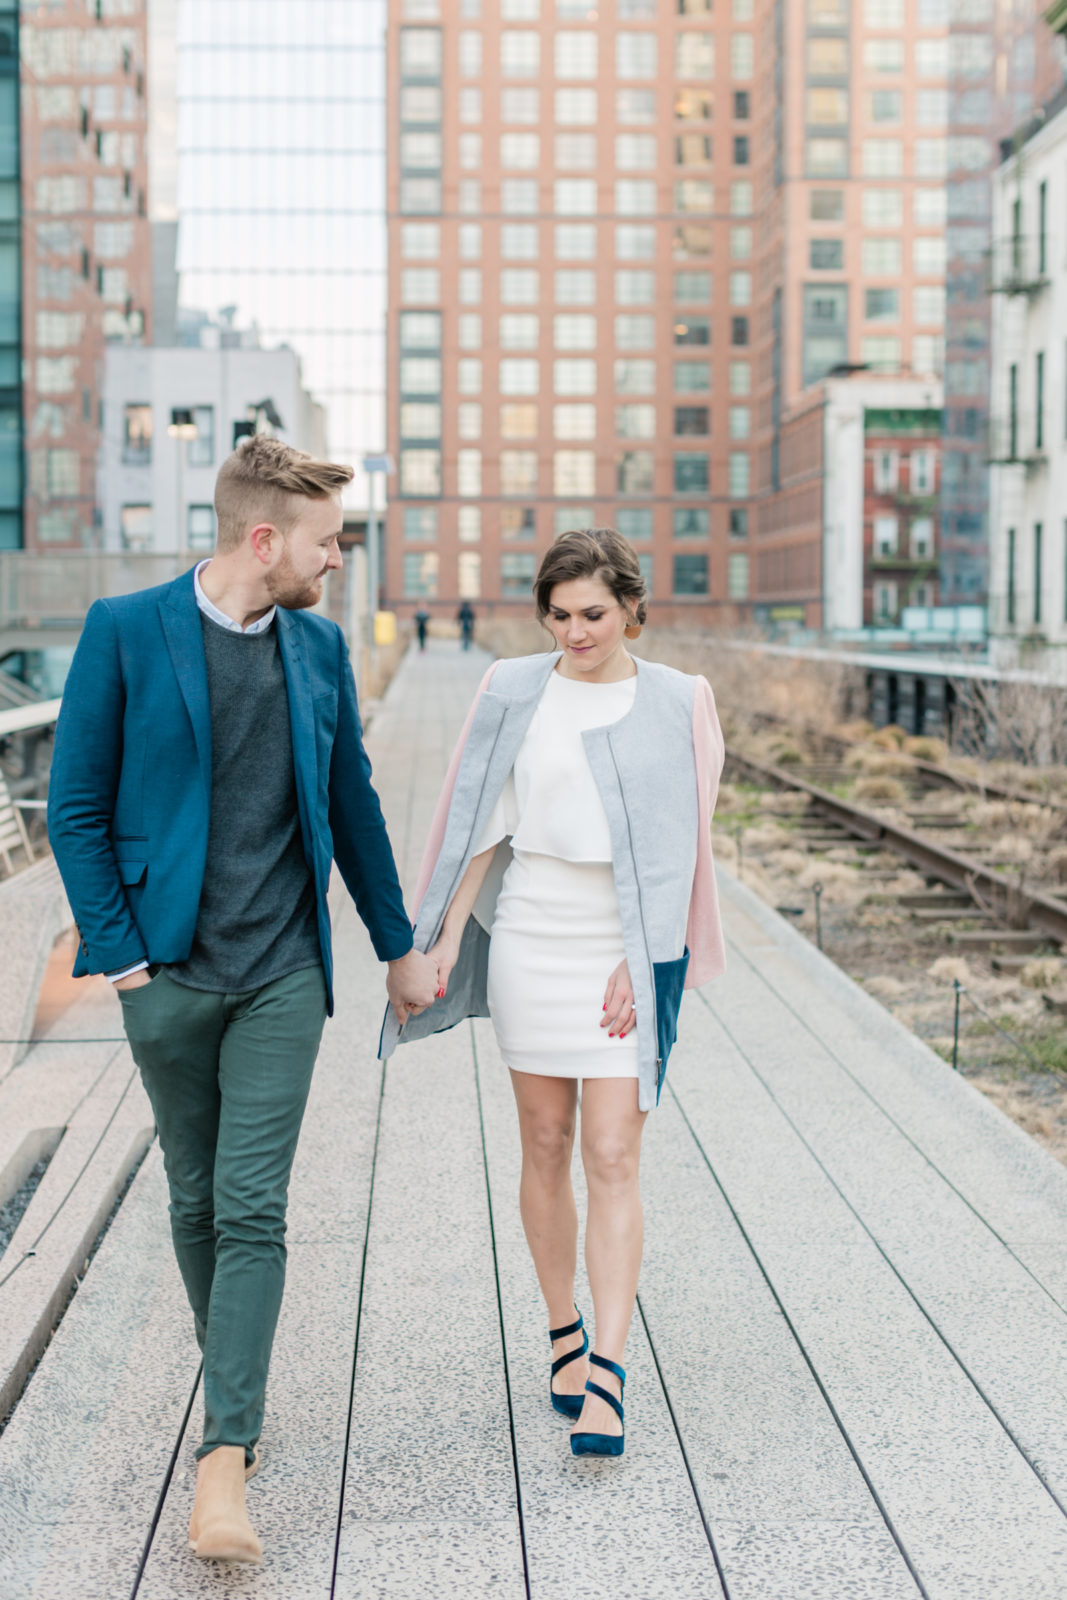 Best Engagement Photos of 2018 | Fine Art Film Photography | Destination Wedding Photographer | Molly Carr Photography | Engagement Session | Pre-Wedding Photos | High Line Engagement Photos | New York City